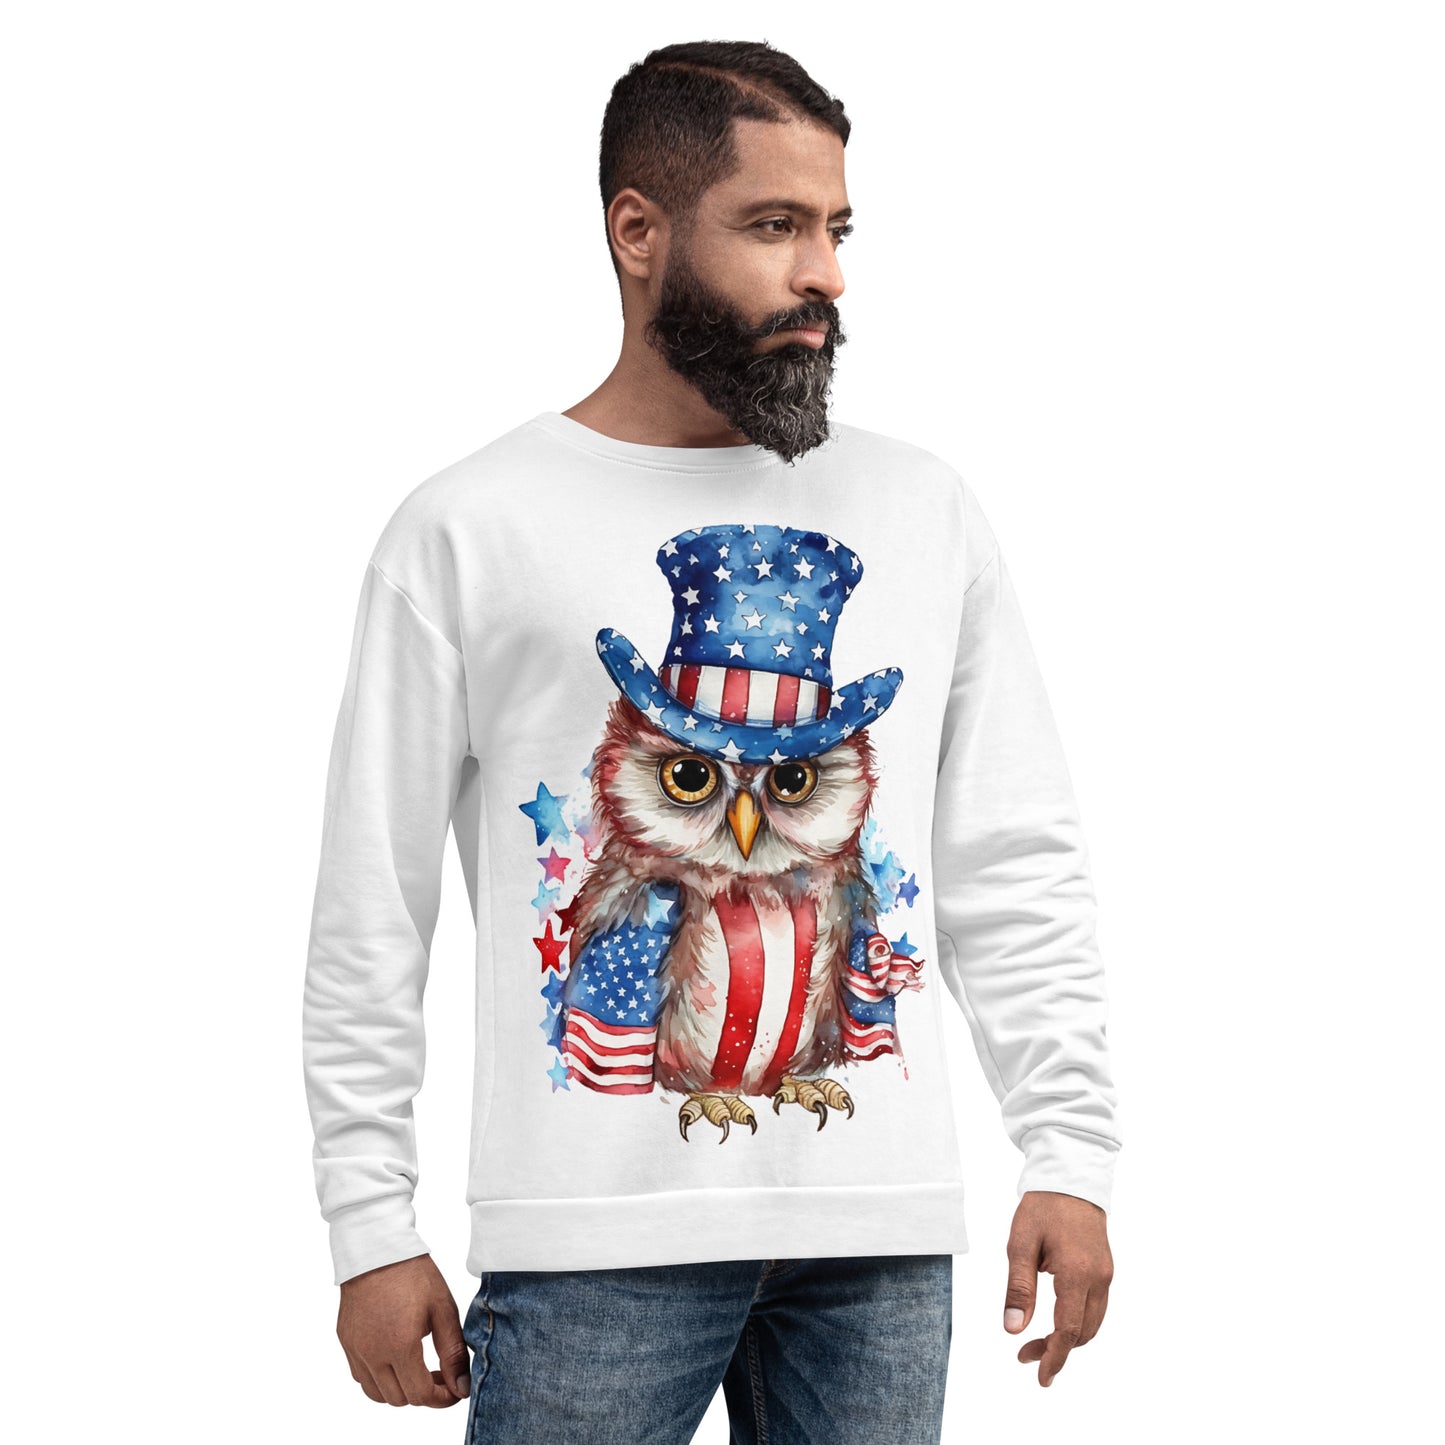 Patriotic Owl Lover's White Sweatshirt / USA Colors Owl Sweatshirt For Owl Enthusiasts